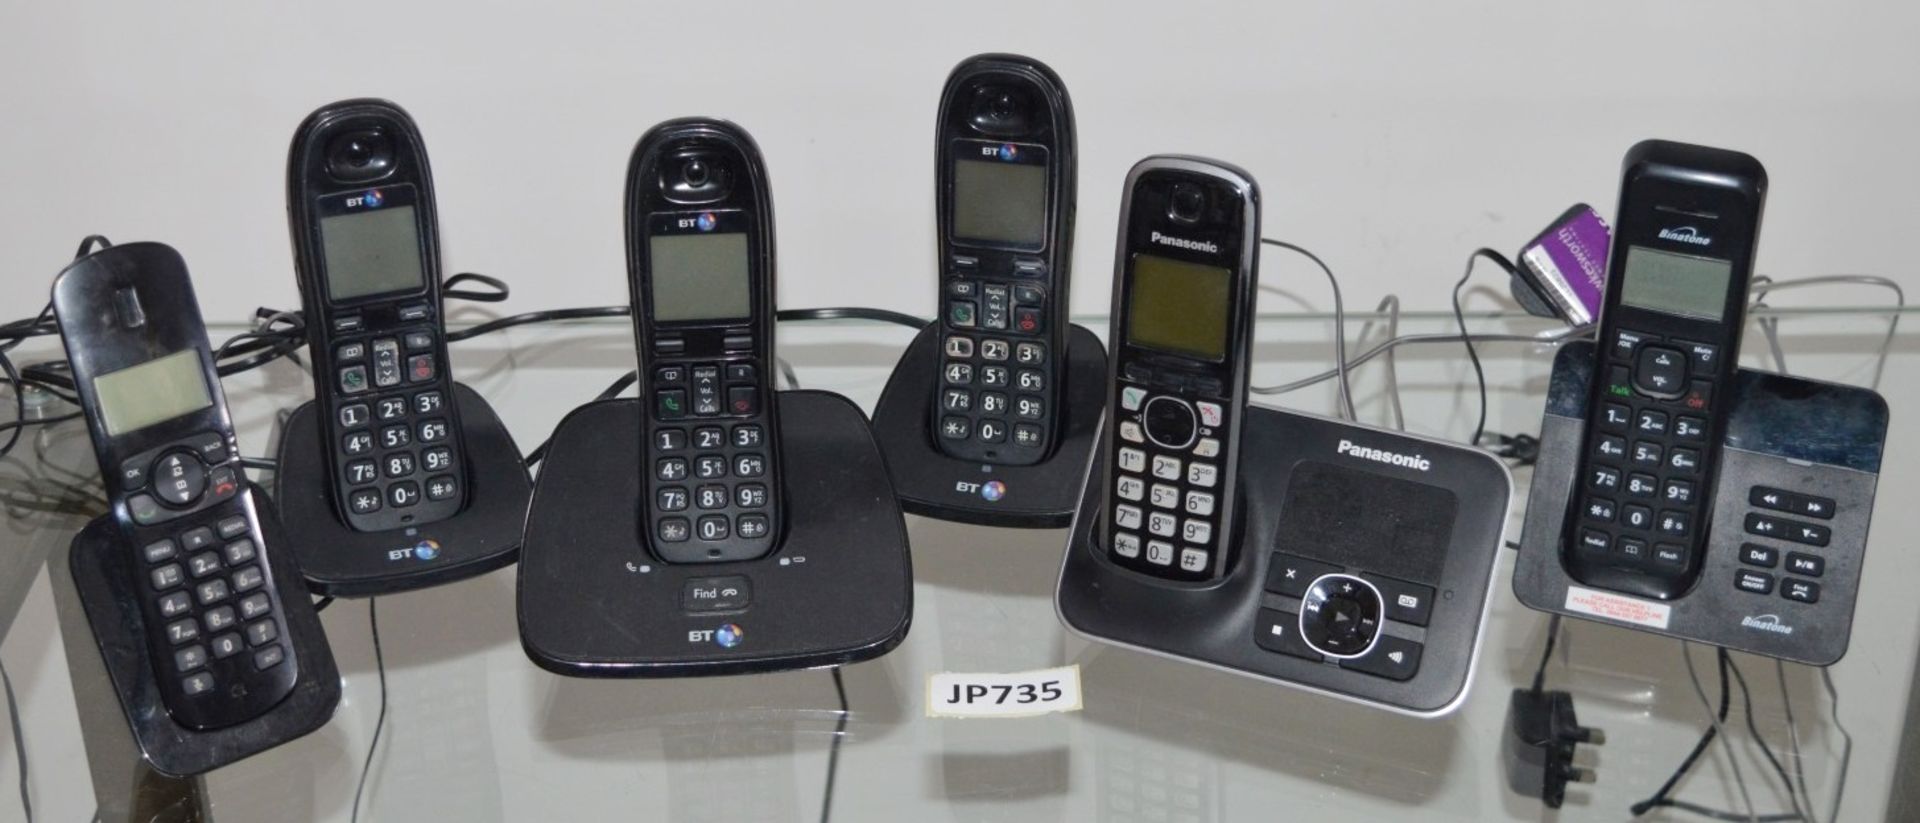 6 x Cordless Phone Handsets - Includes BT, Binatone and Panasonic Models - CL285 - Ref JP735 -